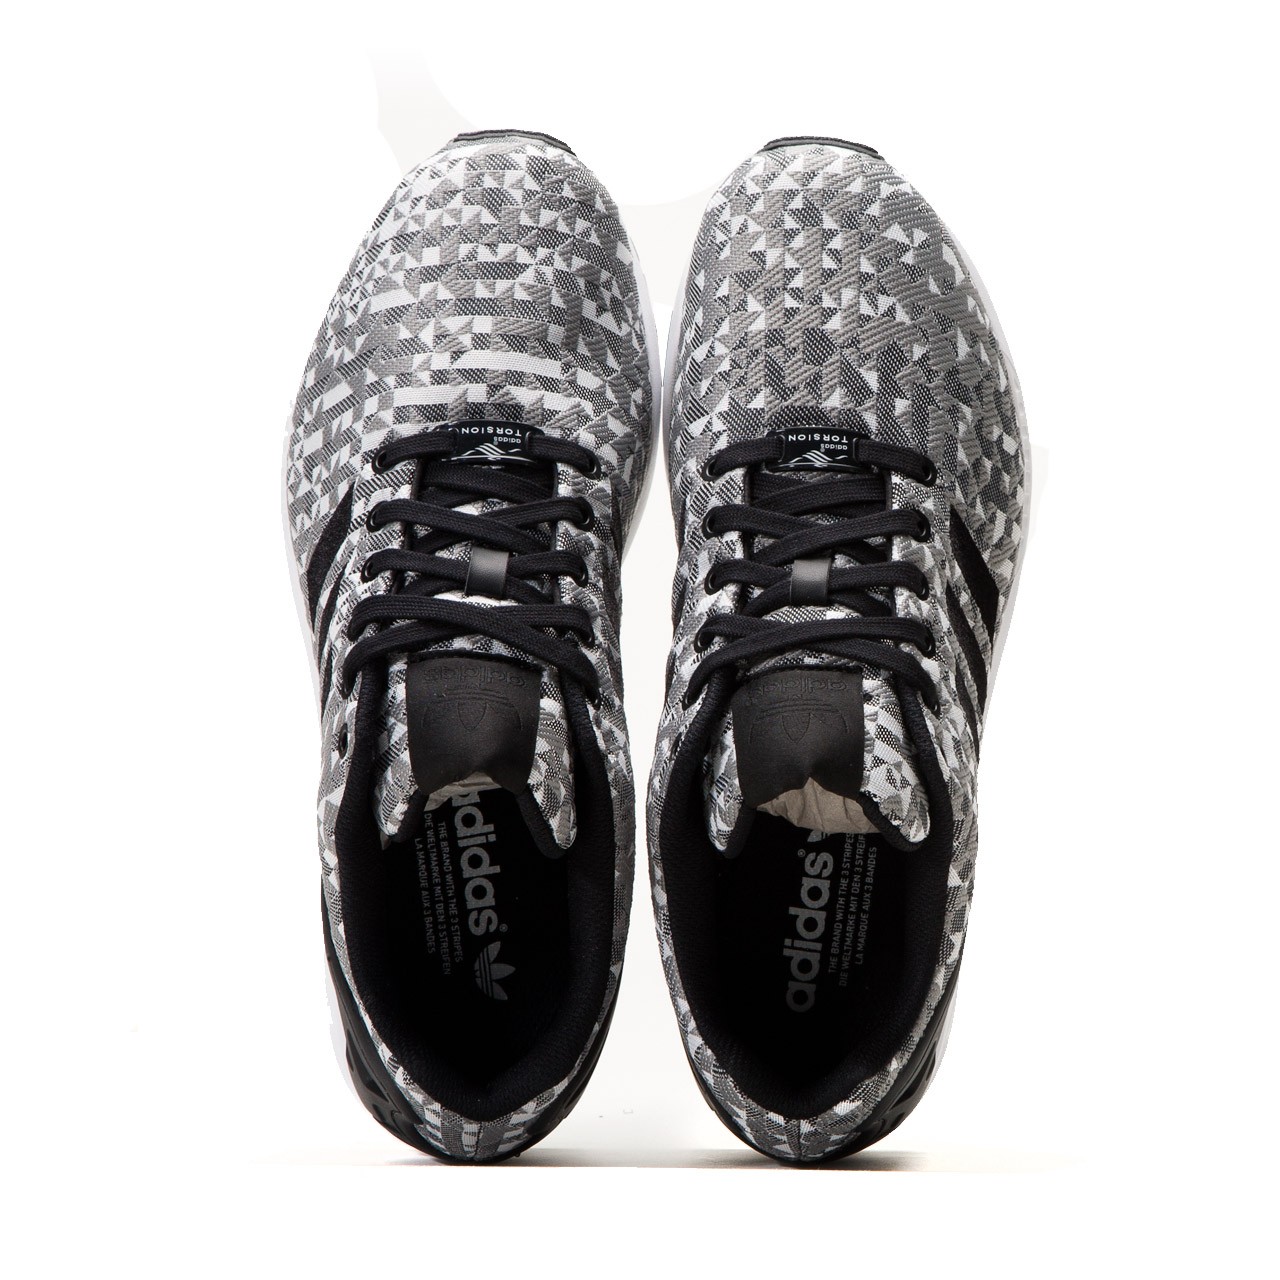 adidas zx flux torsion grey